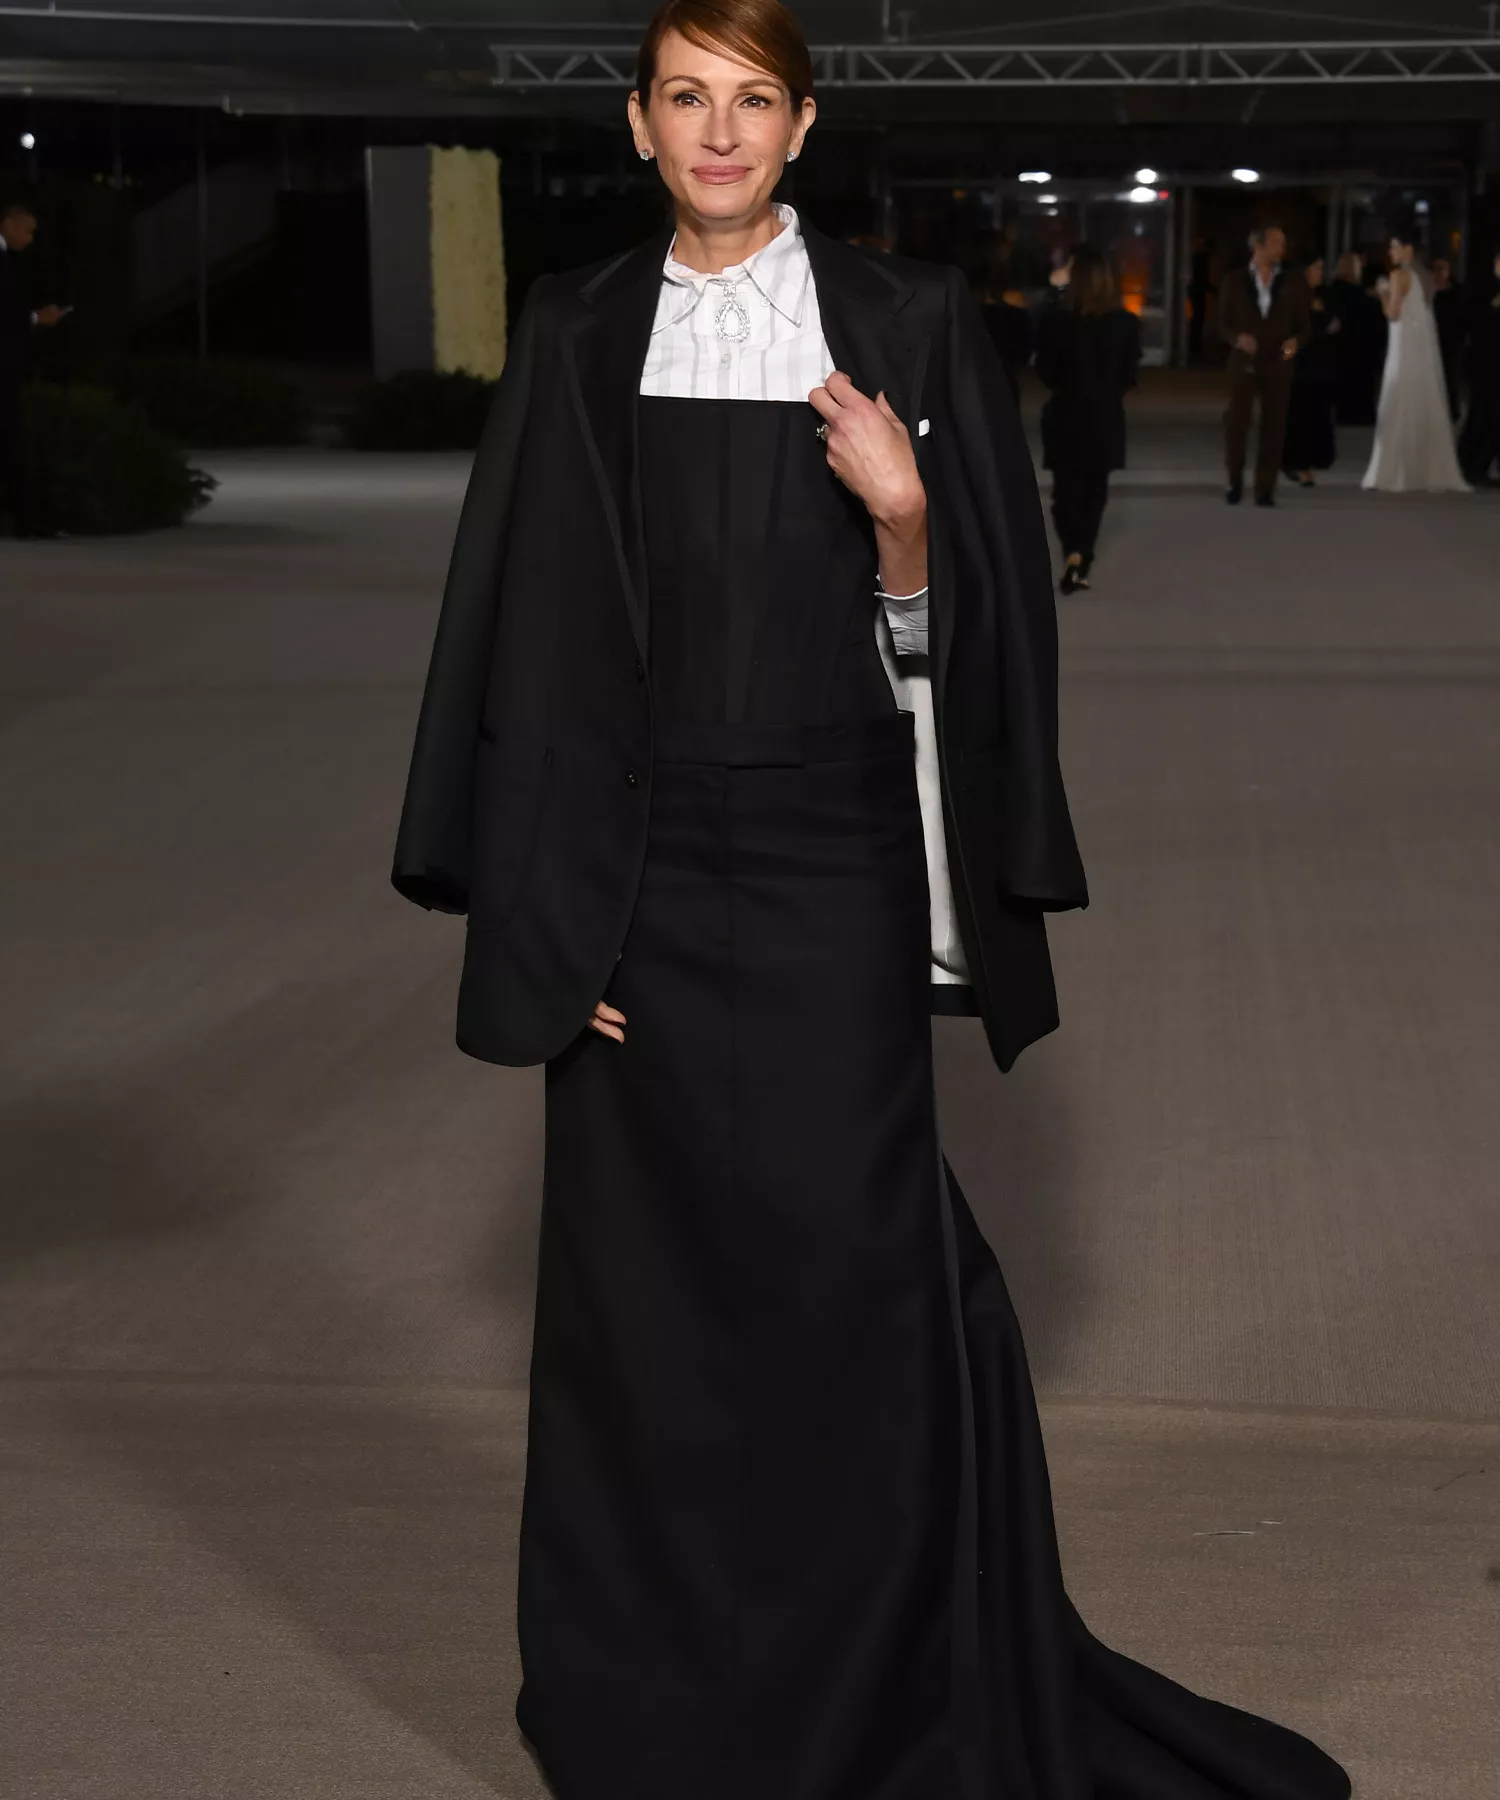 Julia Roberts in a black corset gown